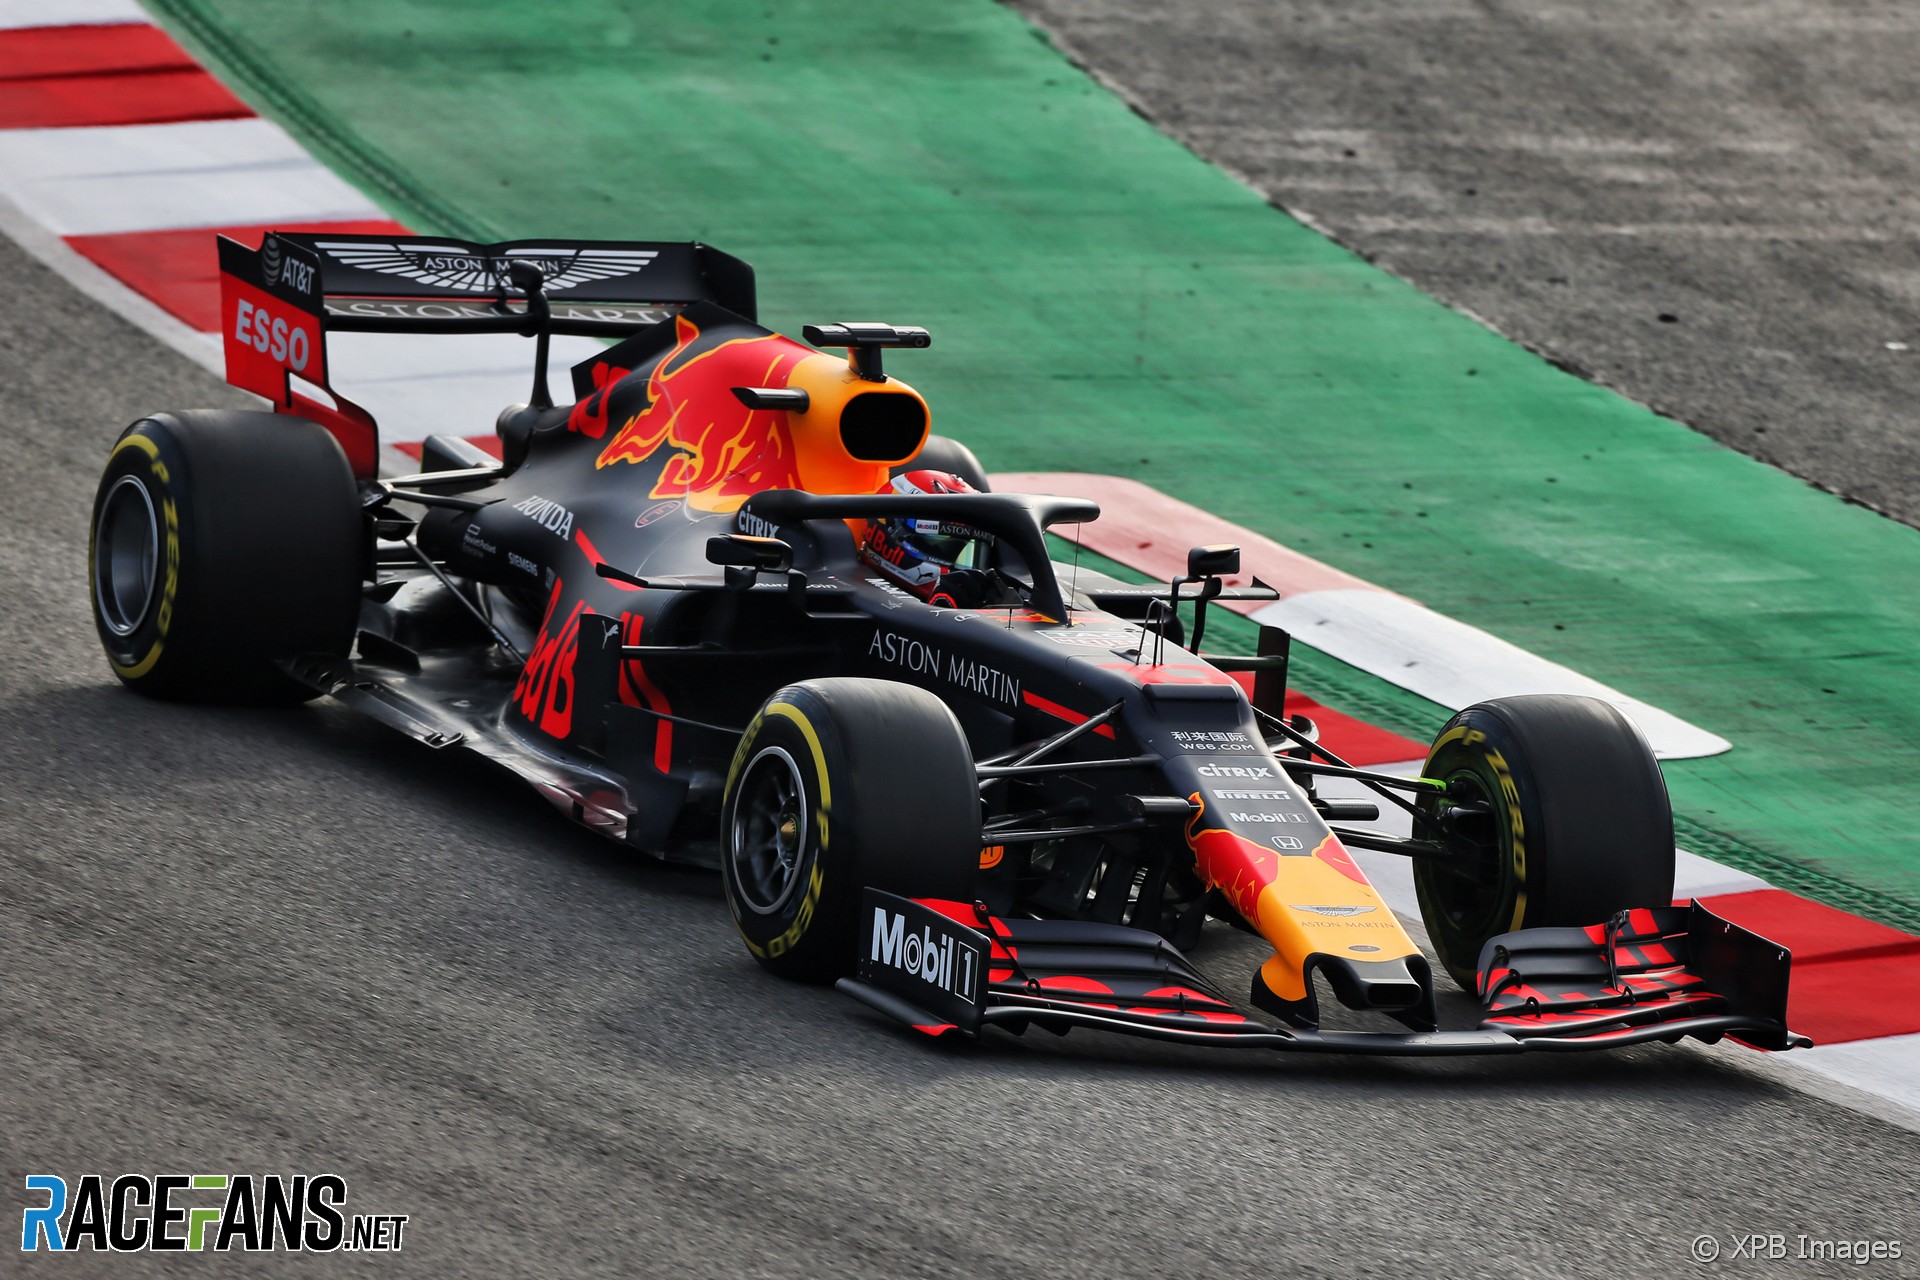 Pierre Gasly, Red Bull, Circuit de Catalunya, 2019